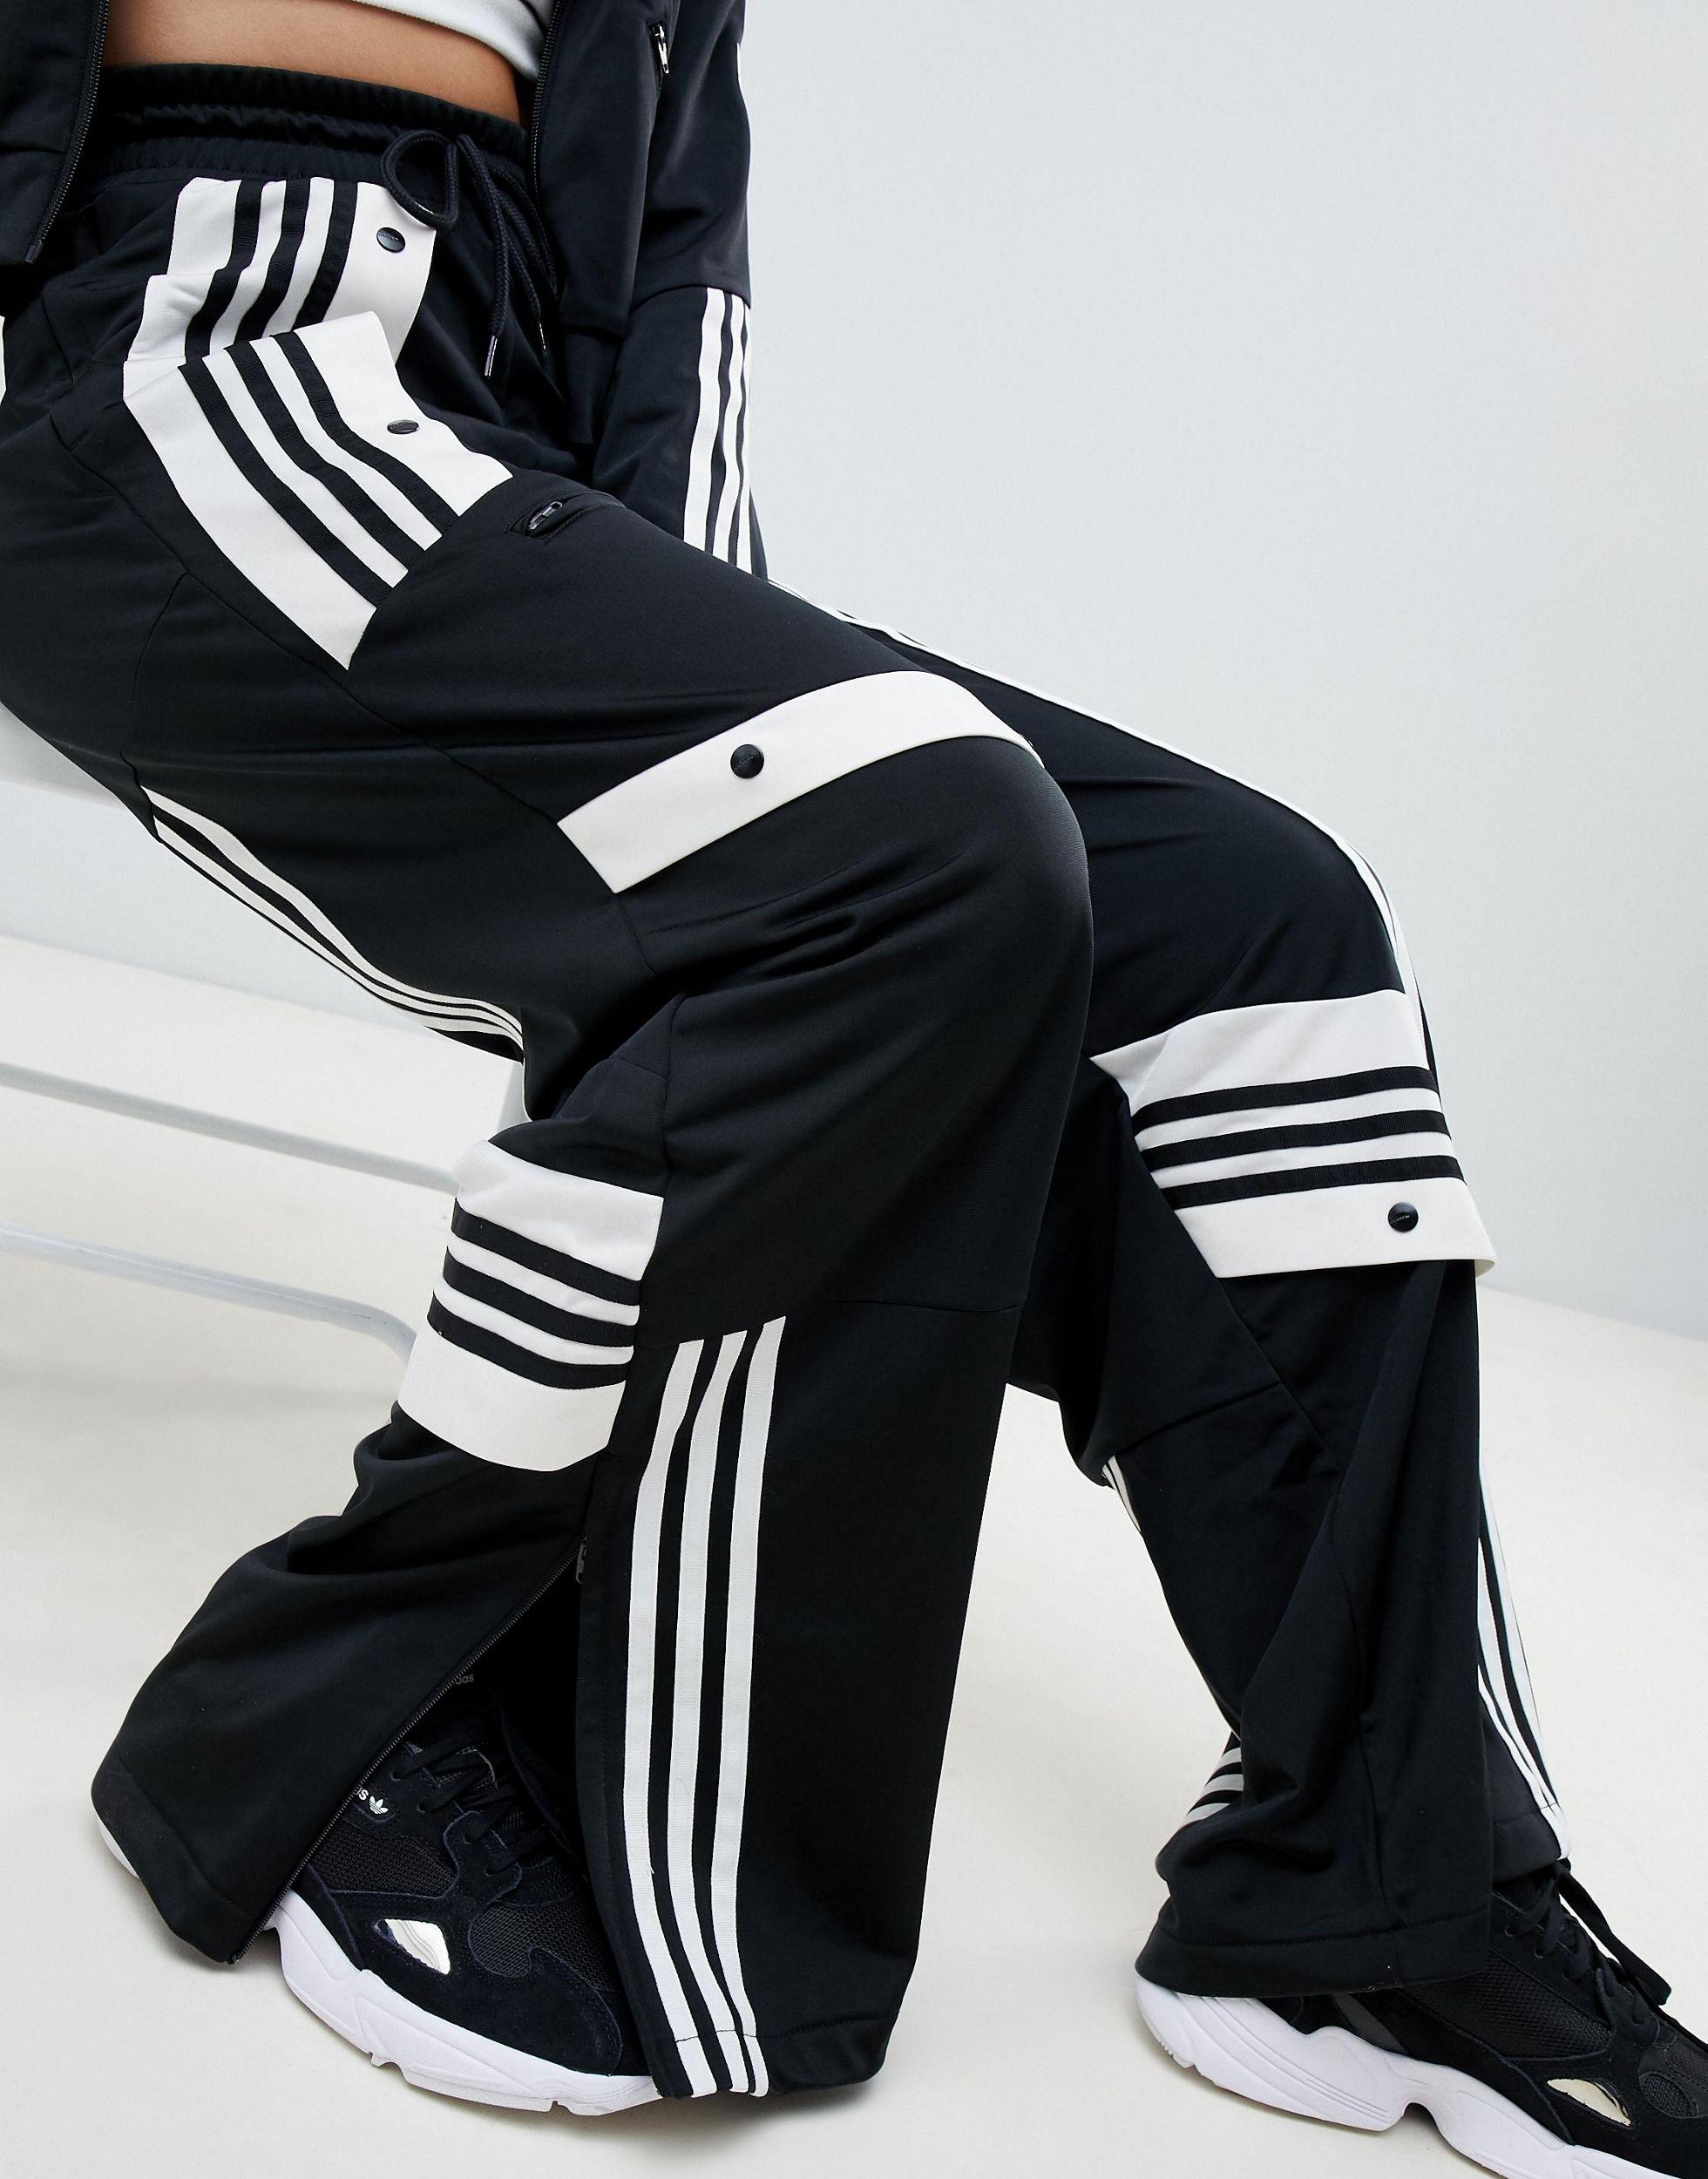 Adidas track. Adidas Danielle Cathari. Adidas Originals спортивные брюки Danielle Cathar. Штаны adidas Cathari. Штаны adidas Danielle Cathari.